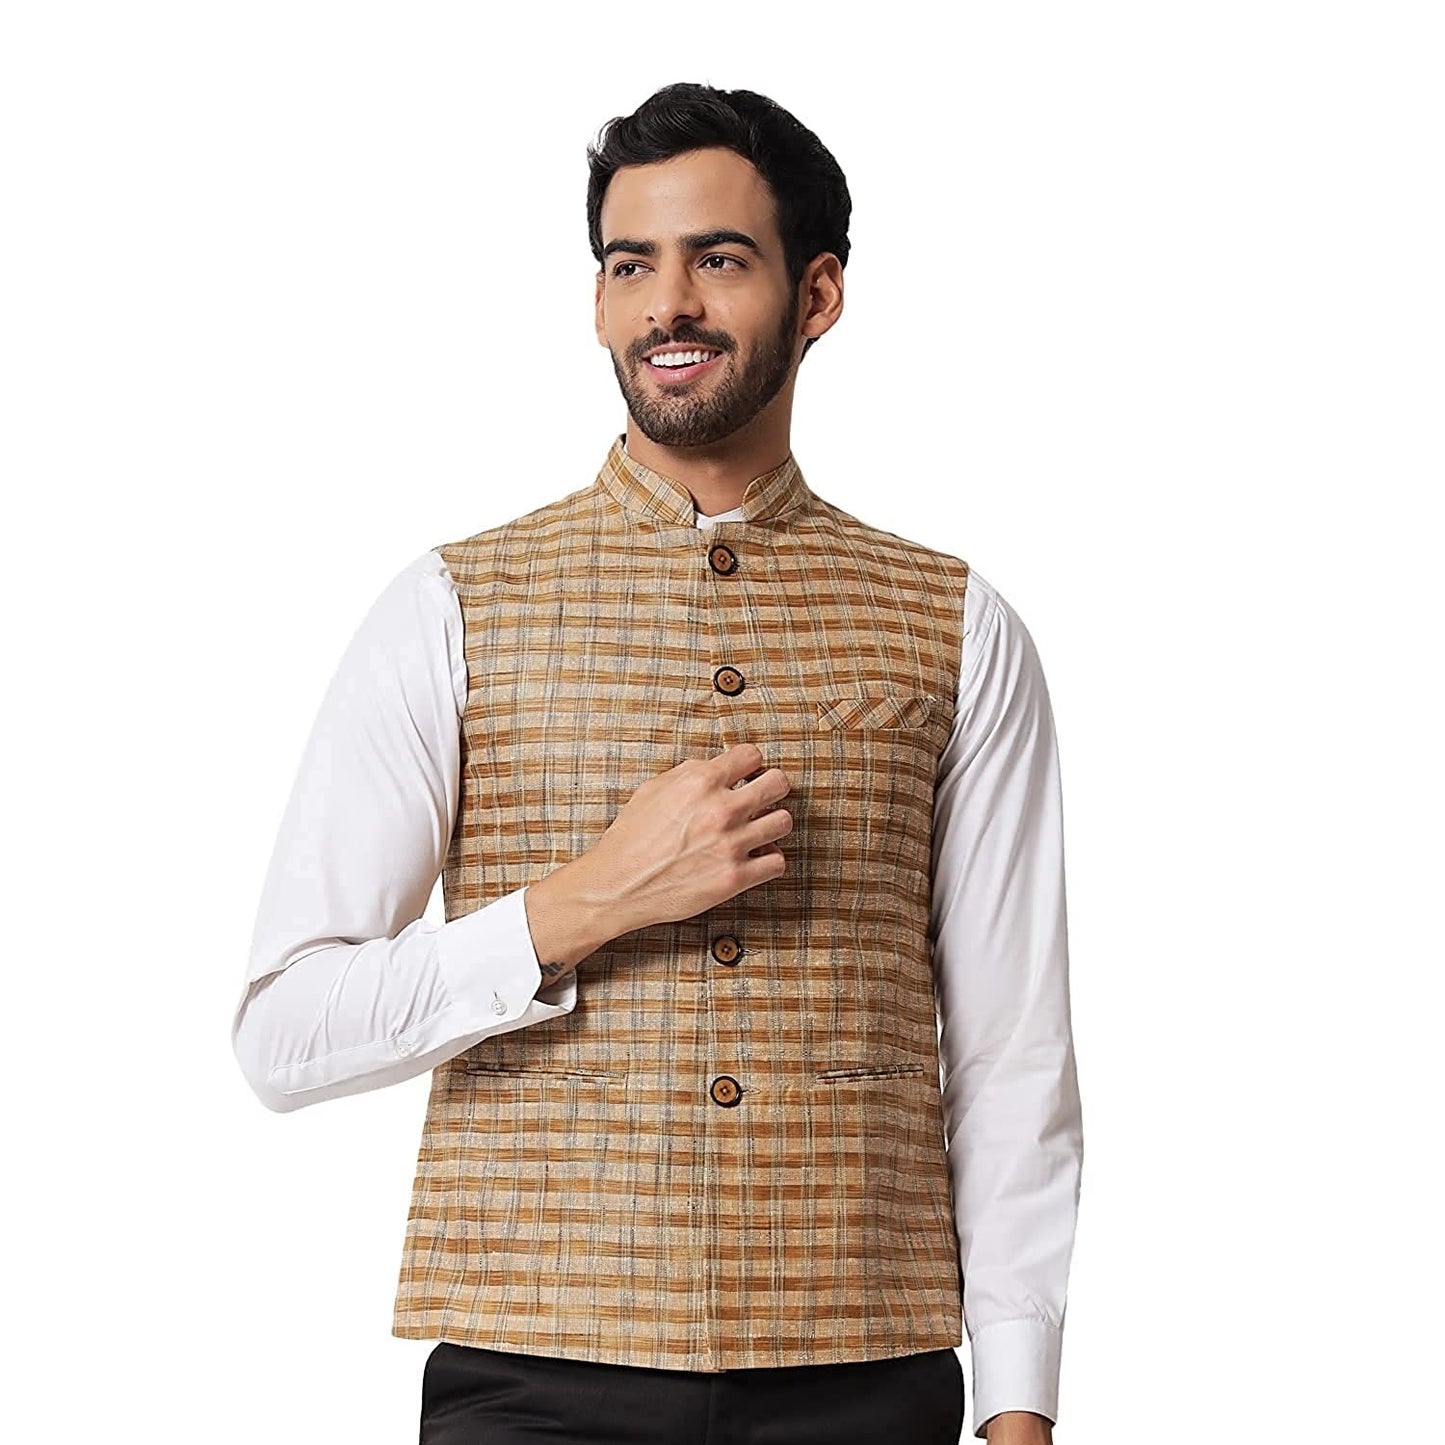 Vatsraa Fusion Modi Jacket / Waistcoat - Chabila Block Check Patterns - South Cotton Jacket